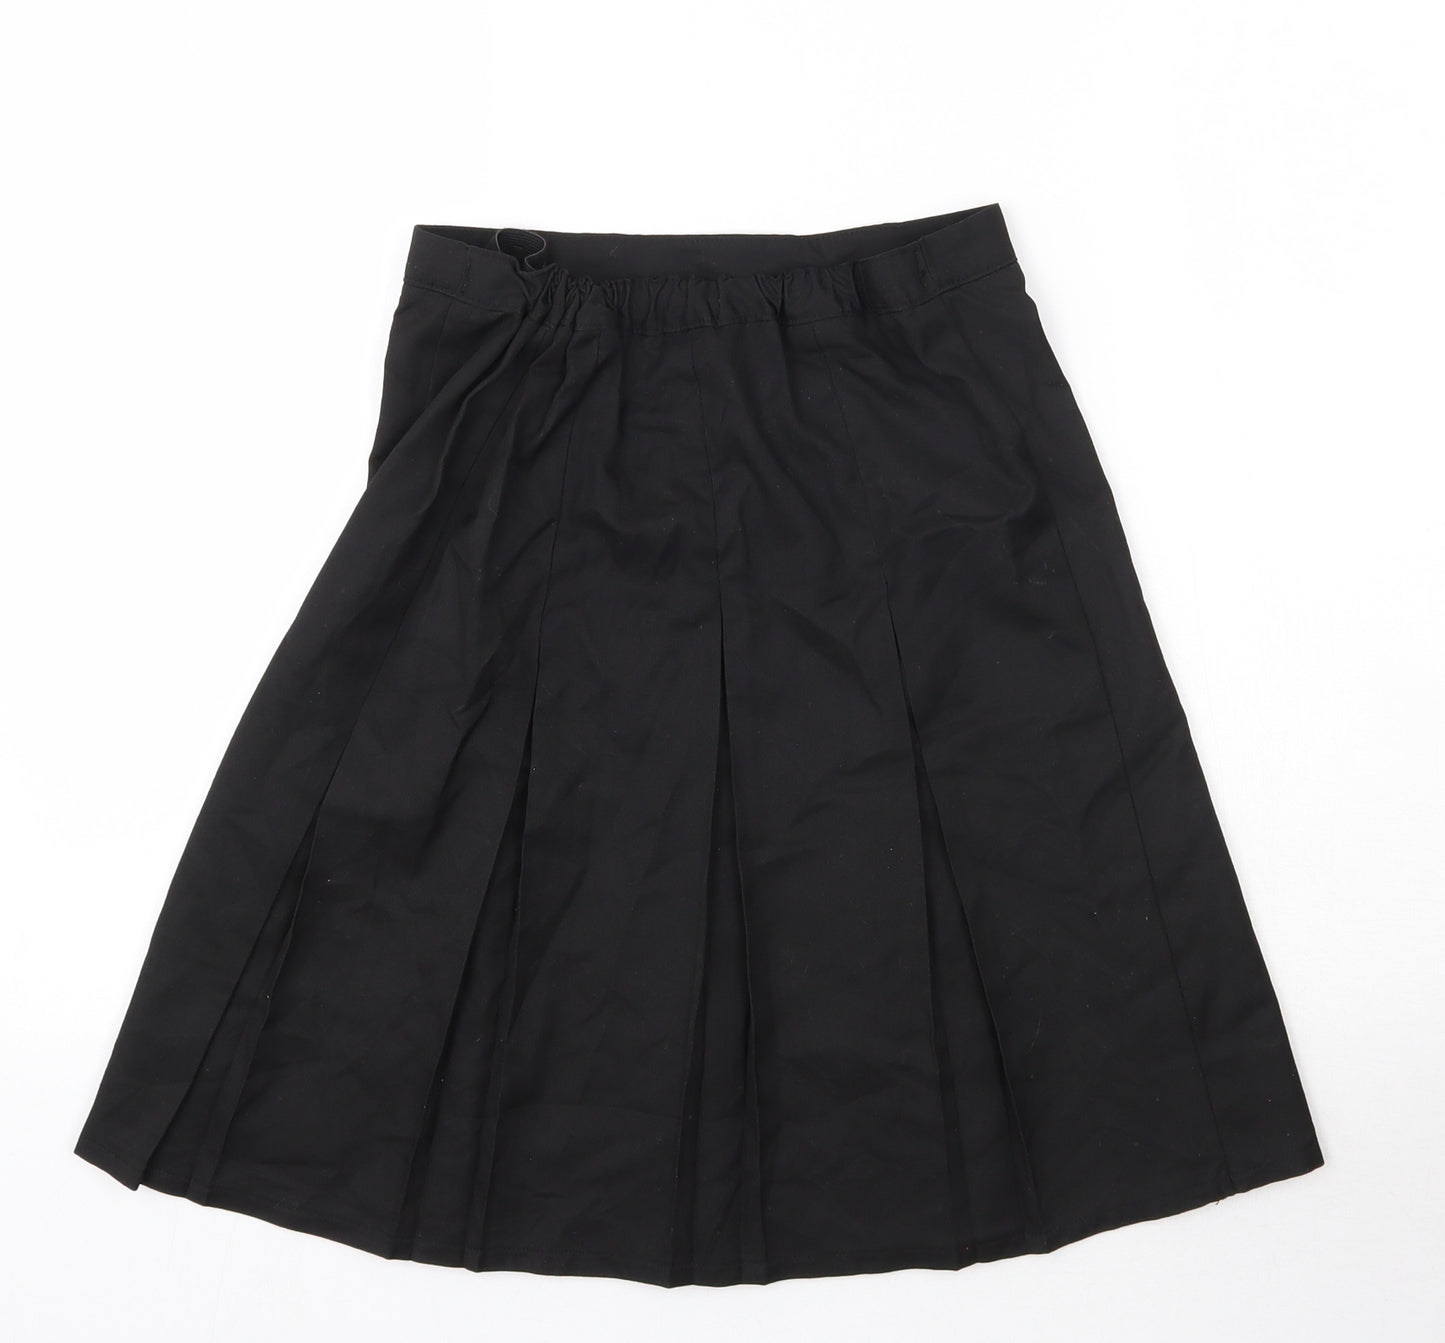 George Girls Black  Polyester A-Line Skirt Size 11-12 Years  Regular  - Elasticated Waist